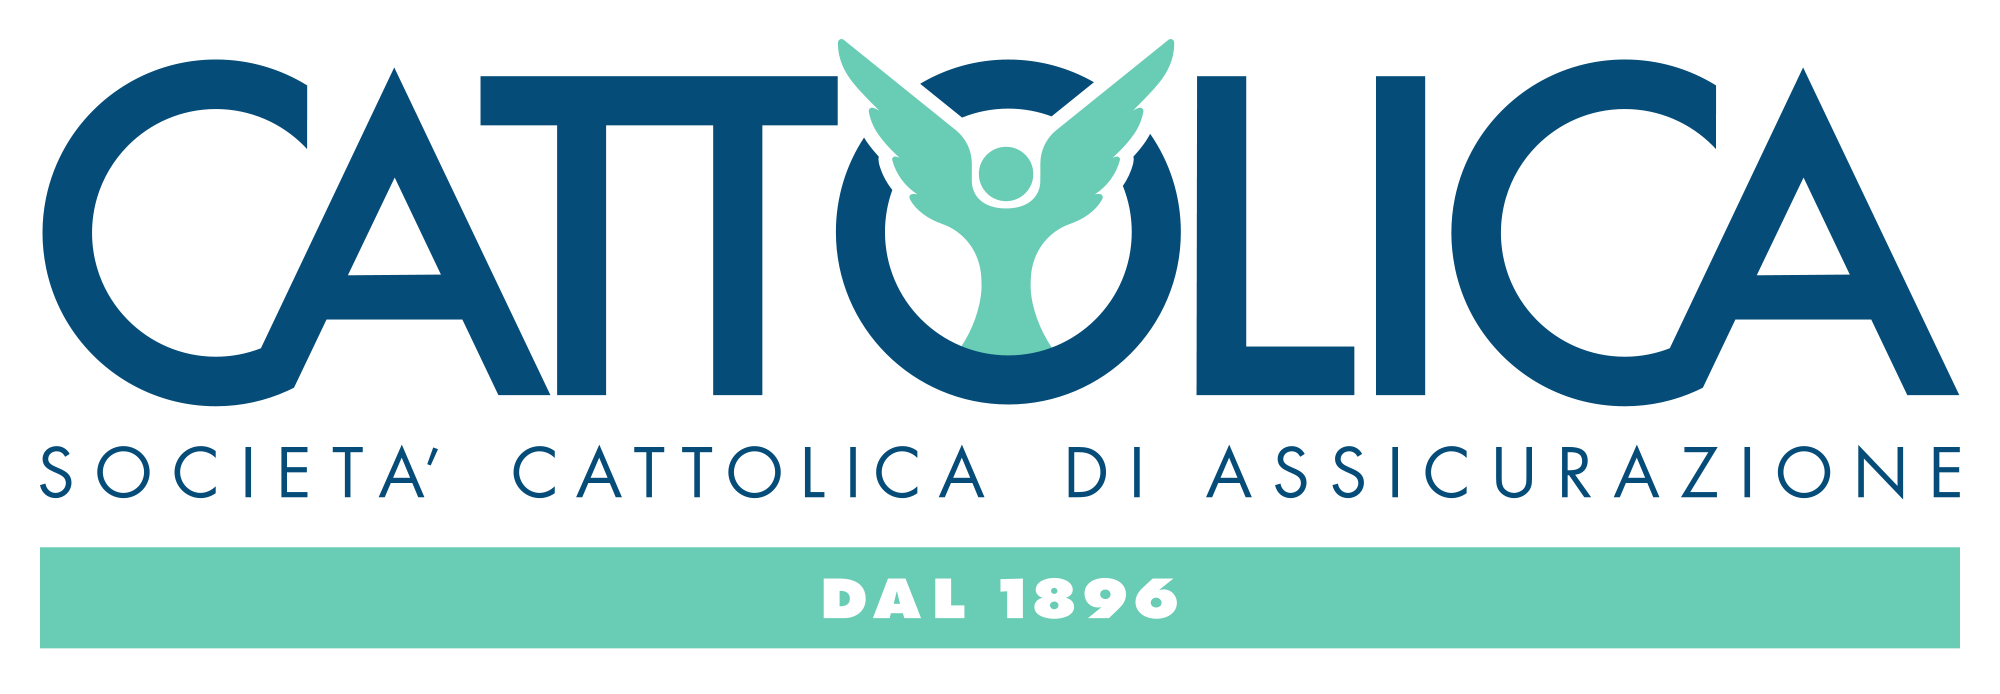 20190411121900Logo Cattolica Assicurazioni